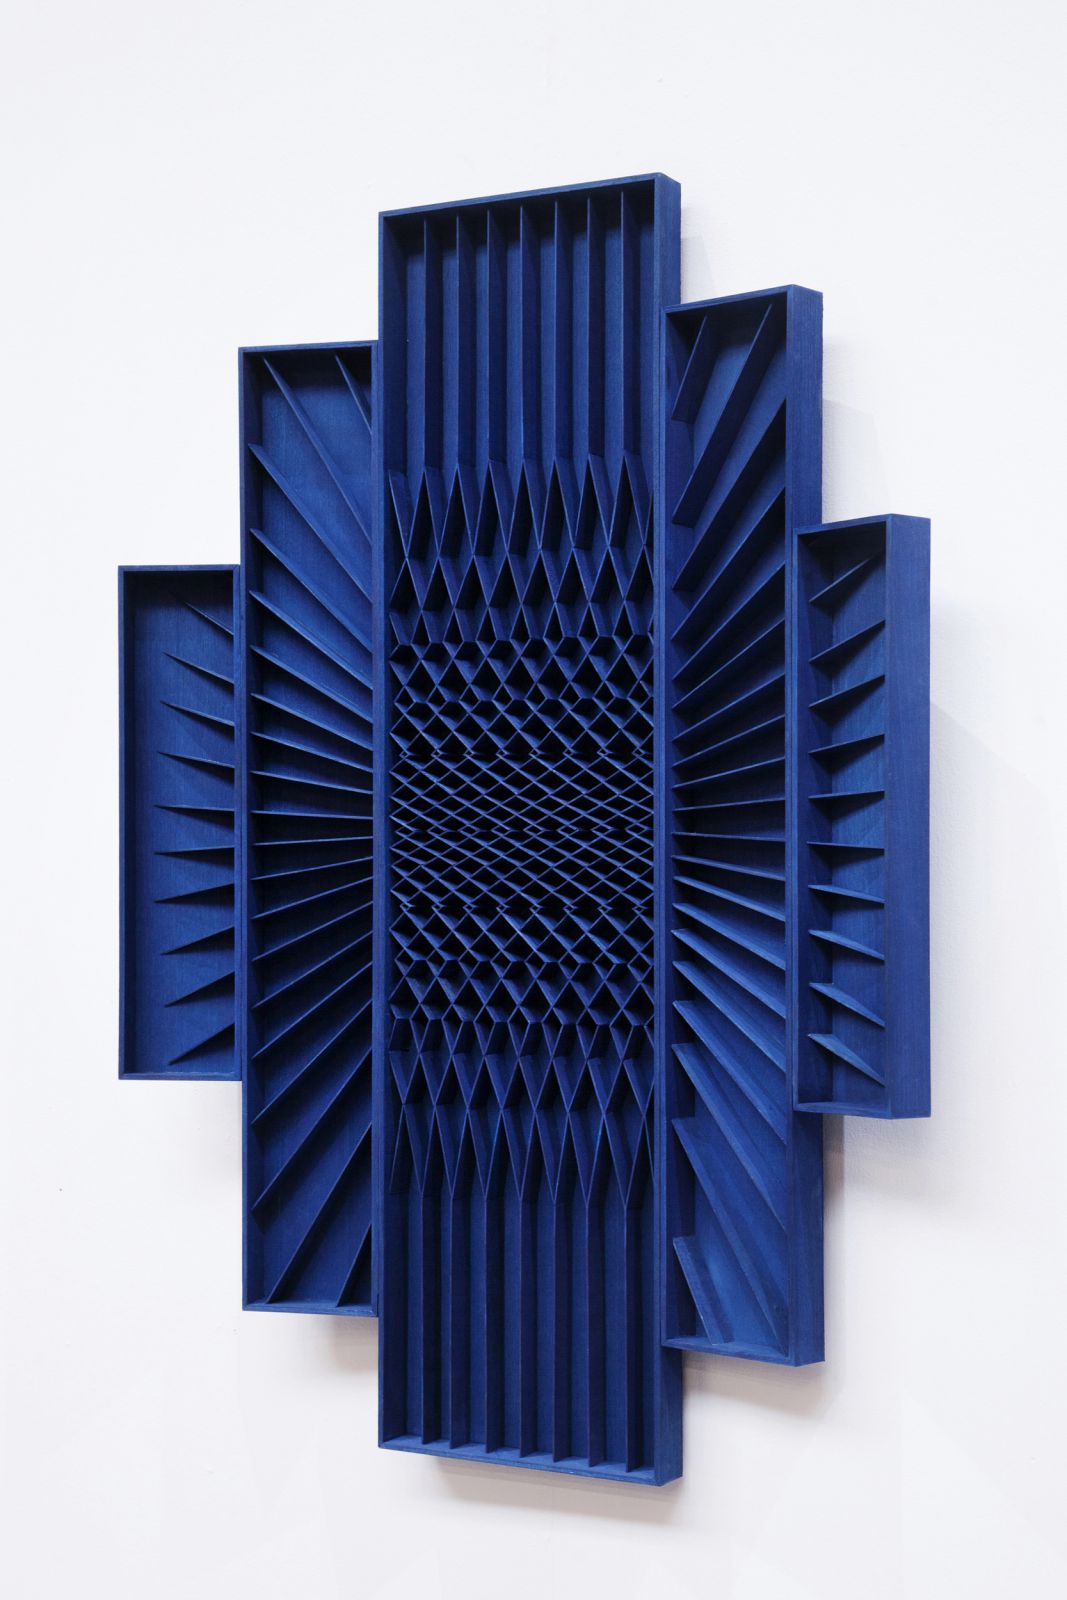 100 x 70cm, wood, cobalt ink, 2017